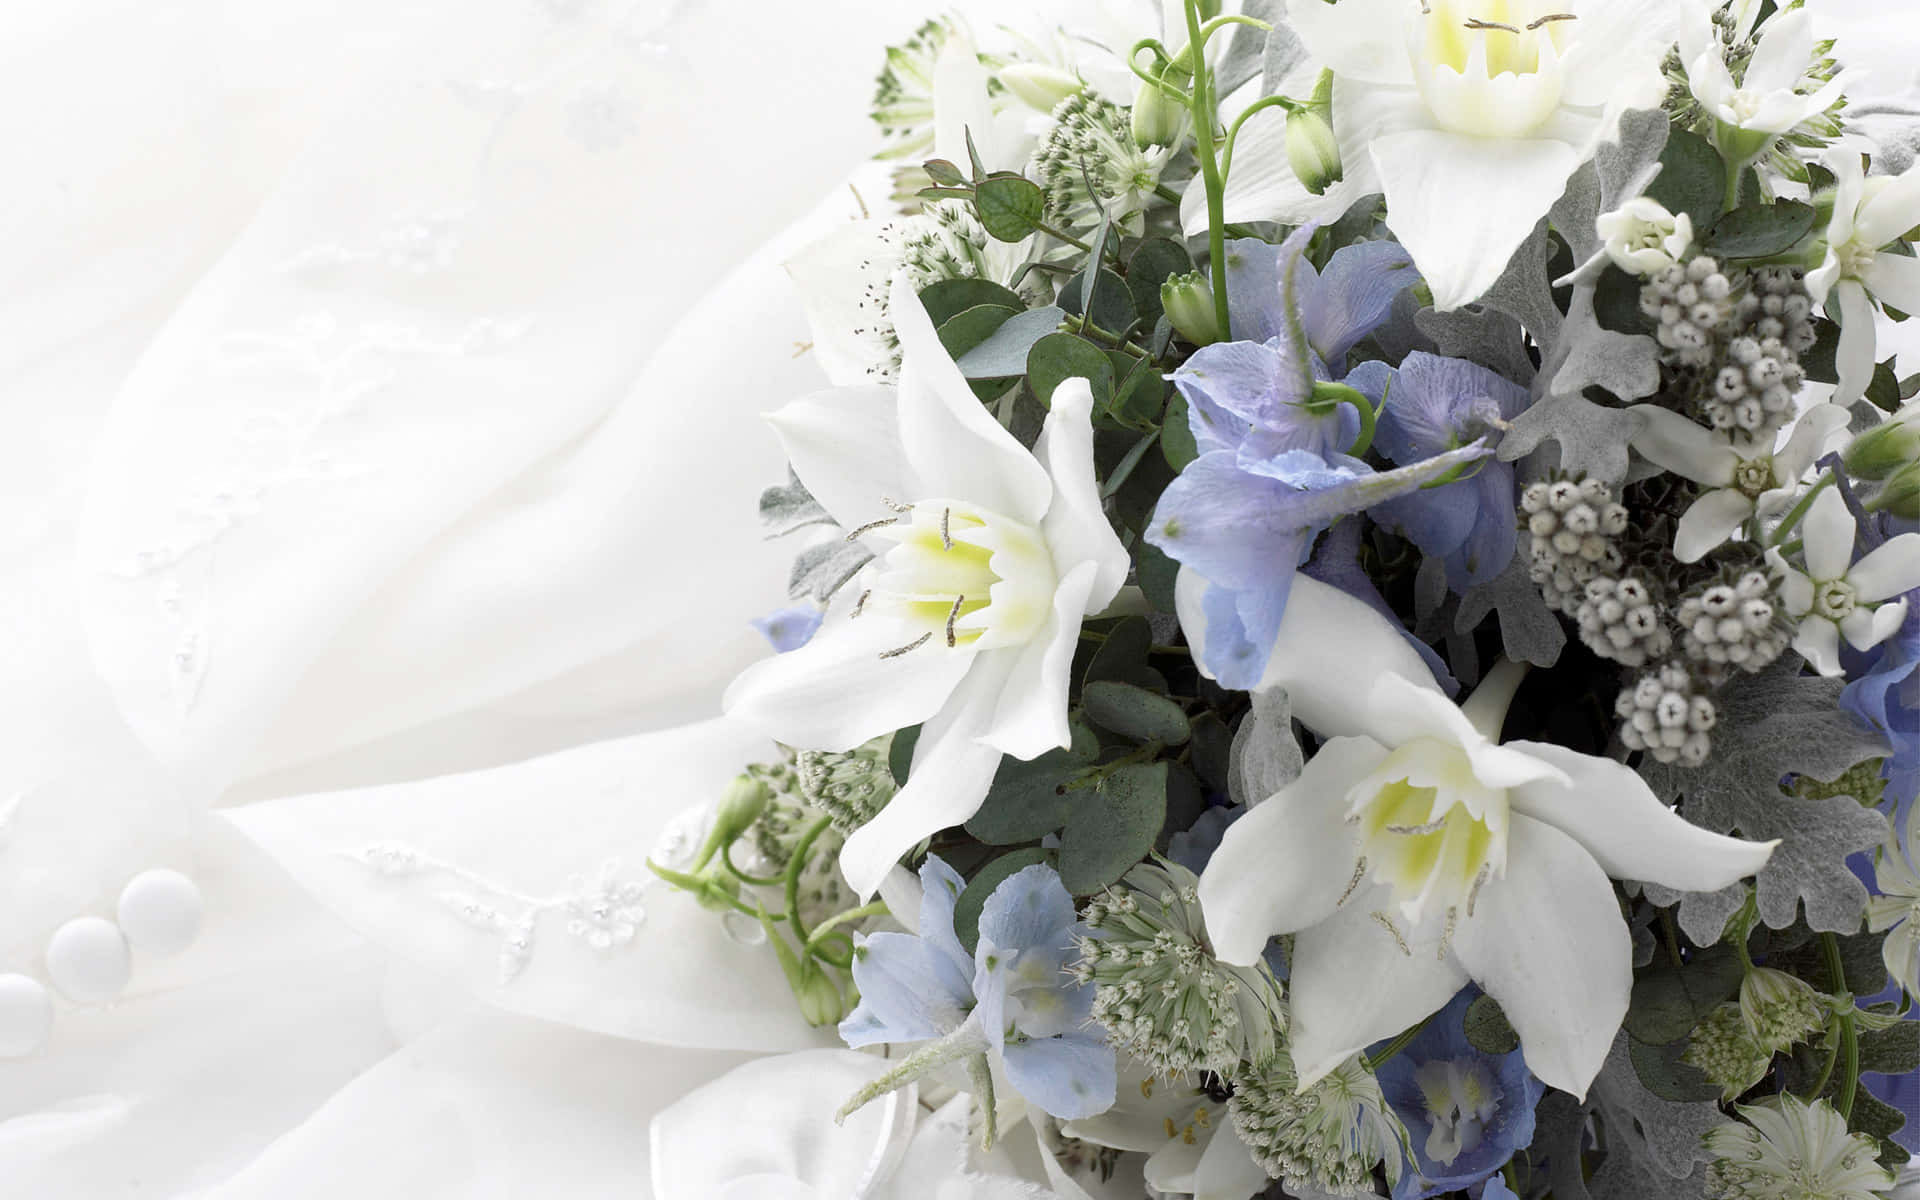 A radiant bride holding an elegant wedding bouquet Wallpaper